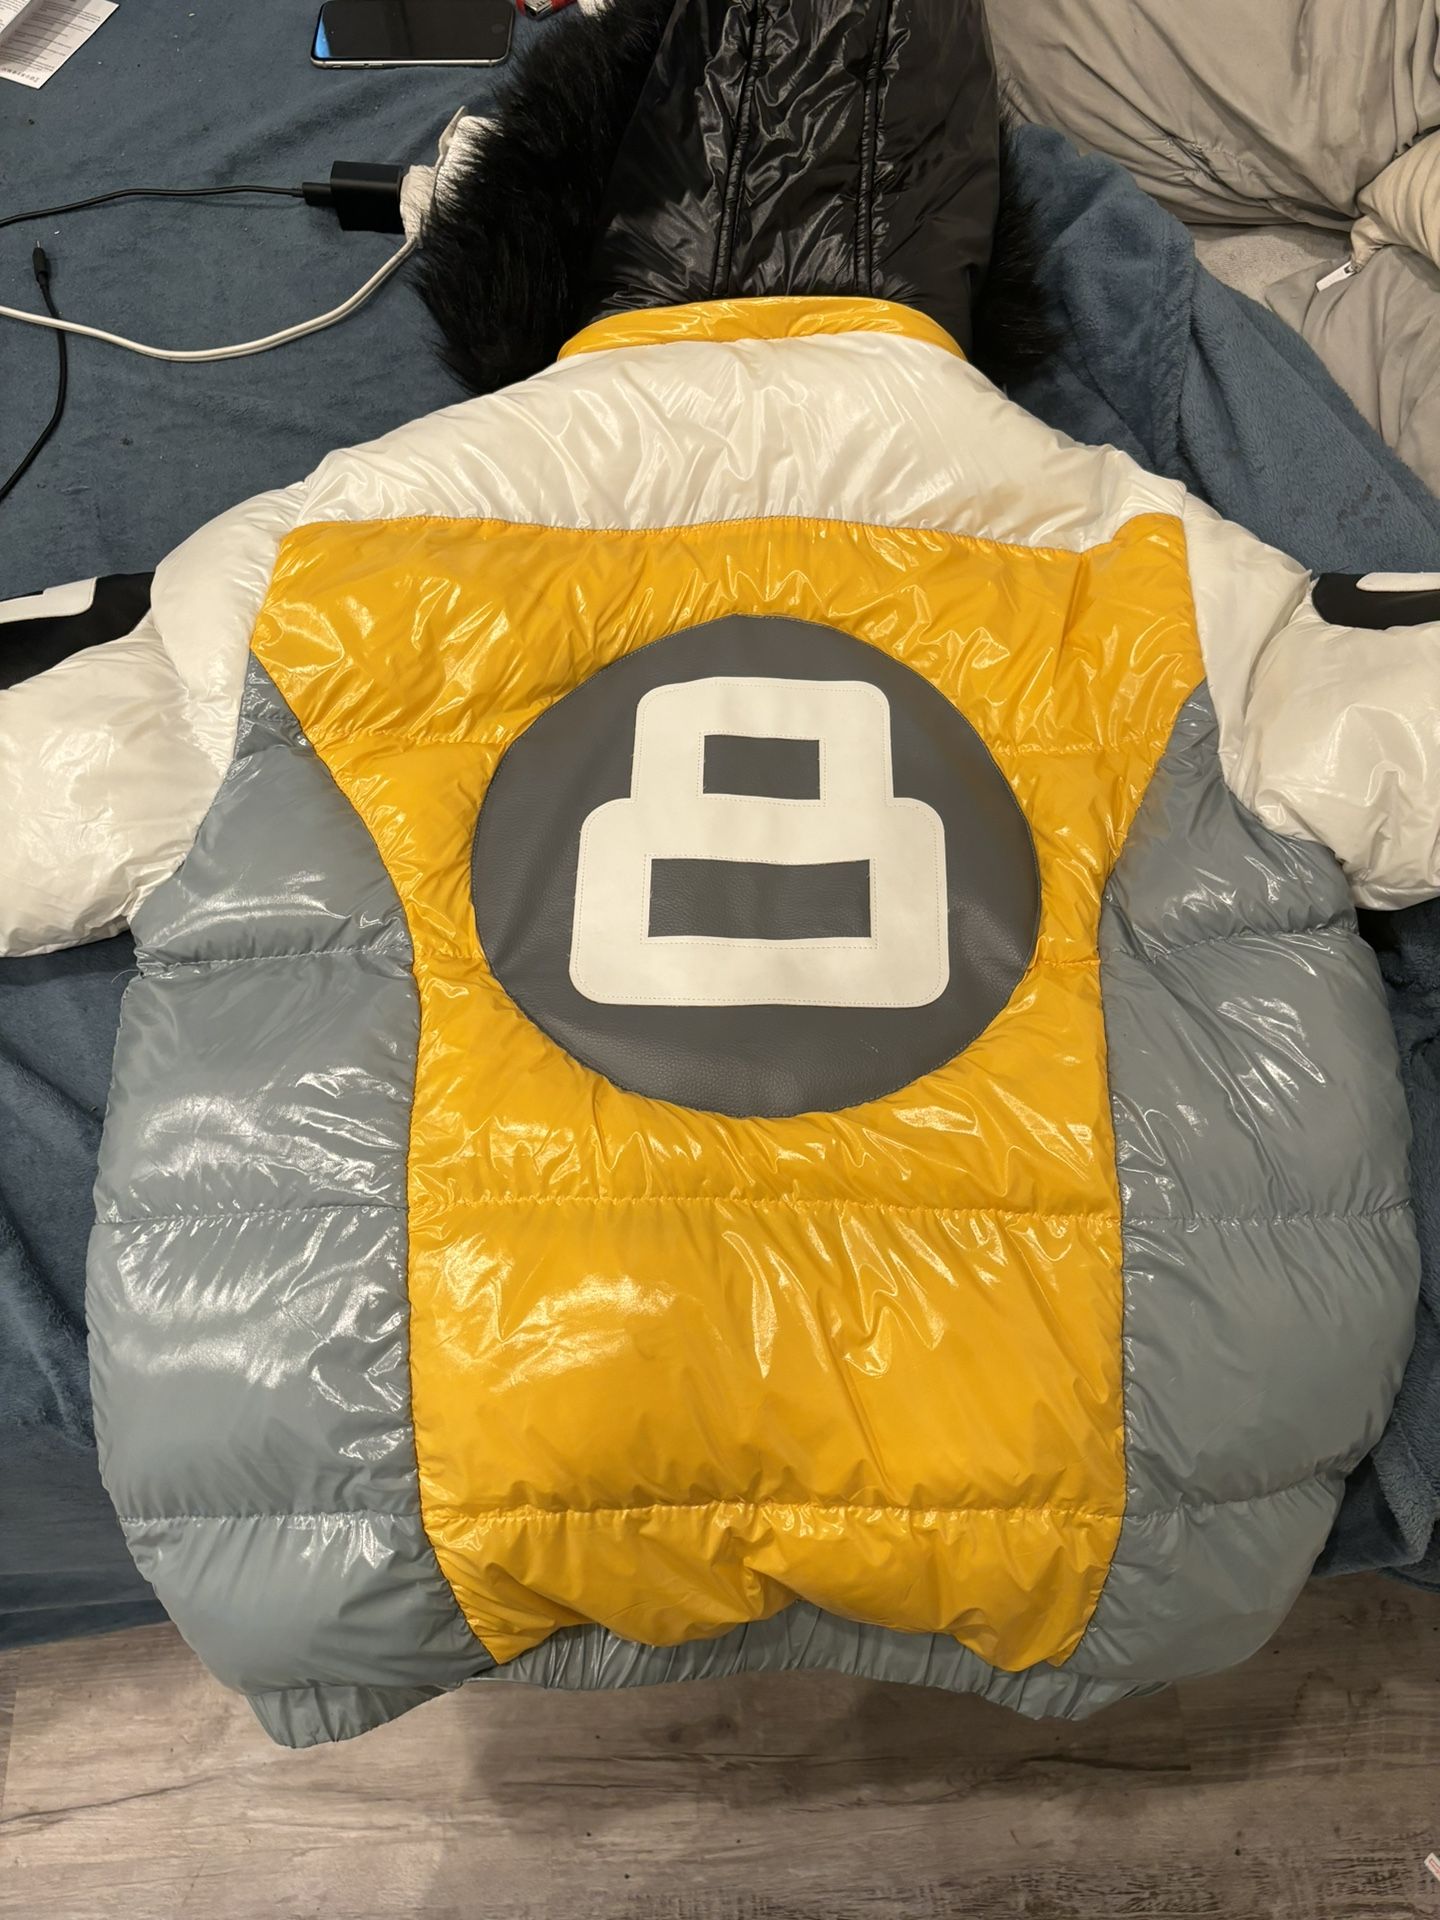 8bAll jacket